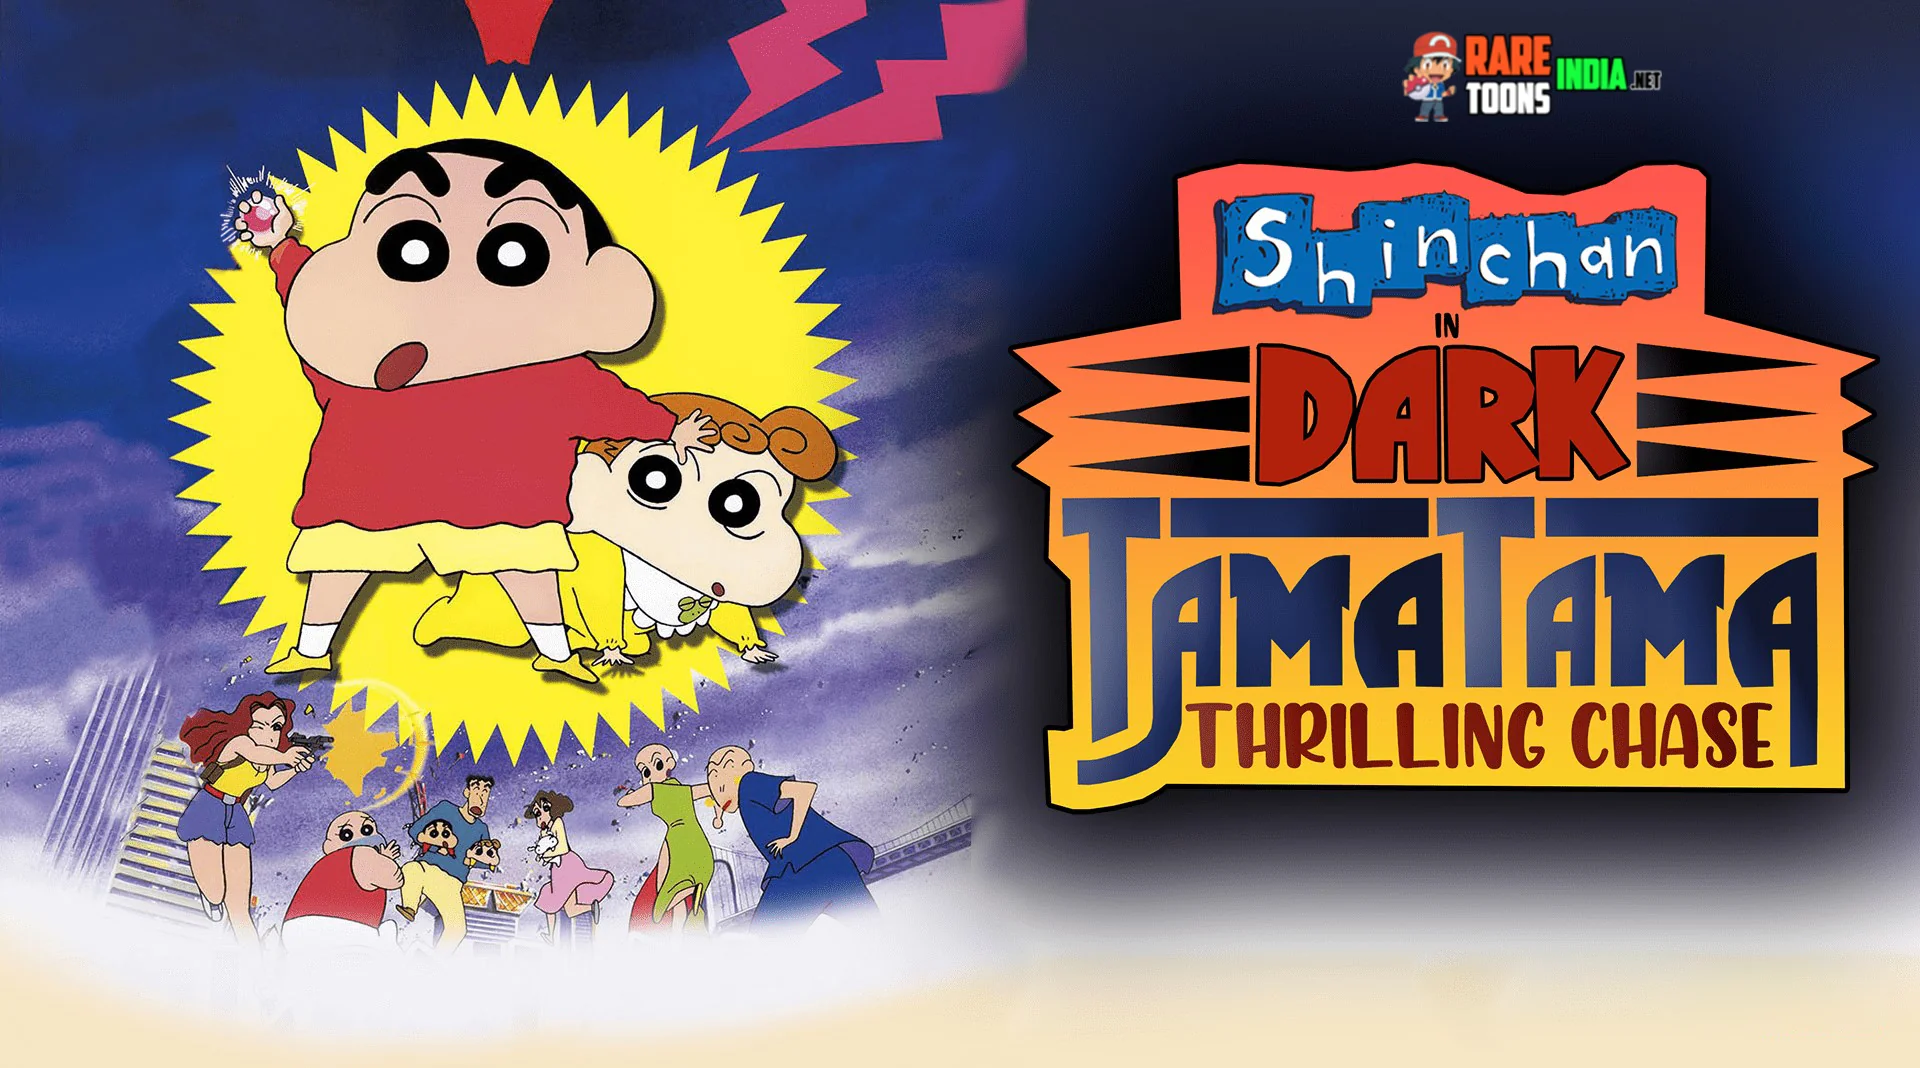 Shinchan in Dark Tama Tama Thrilling Chase 1997 Hindi Jap 480p 720p 1080p Rare Toons India